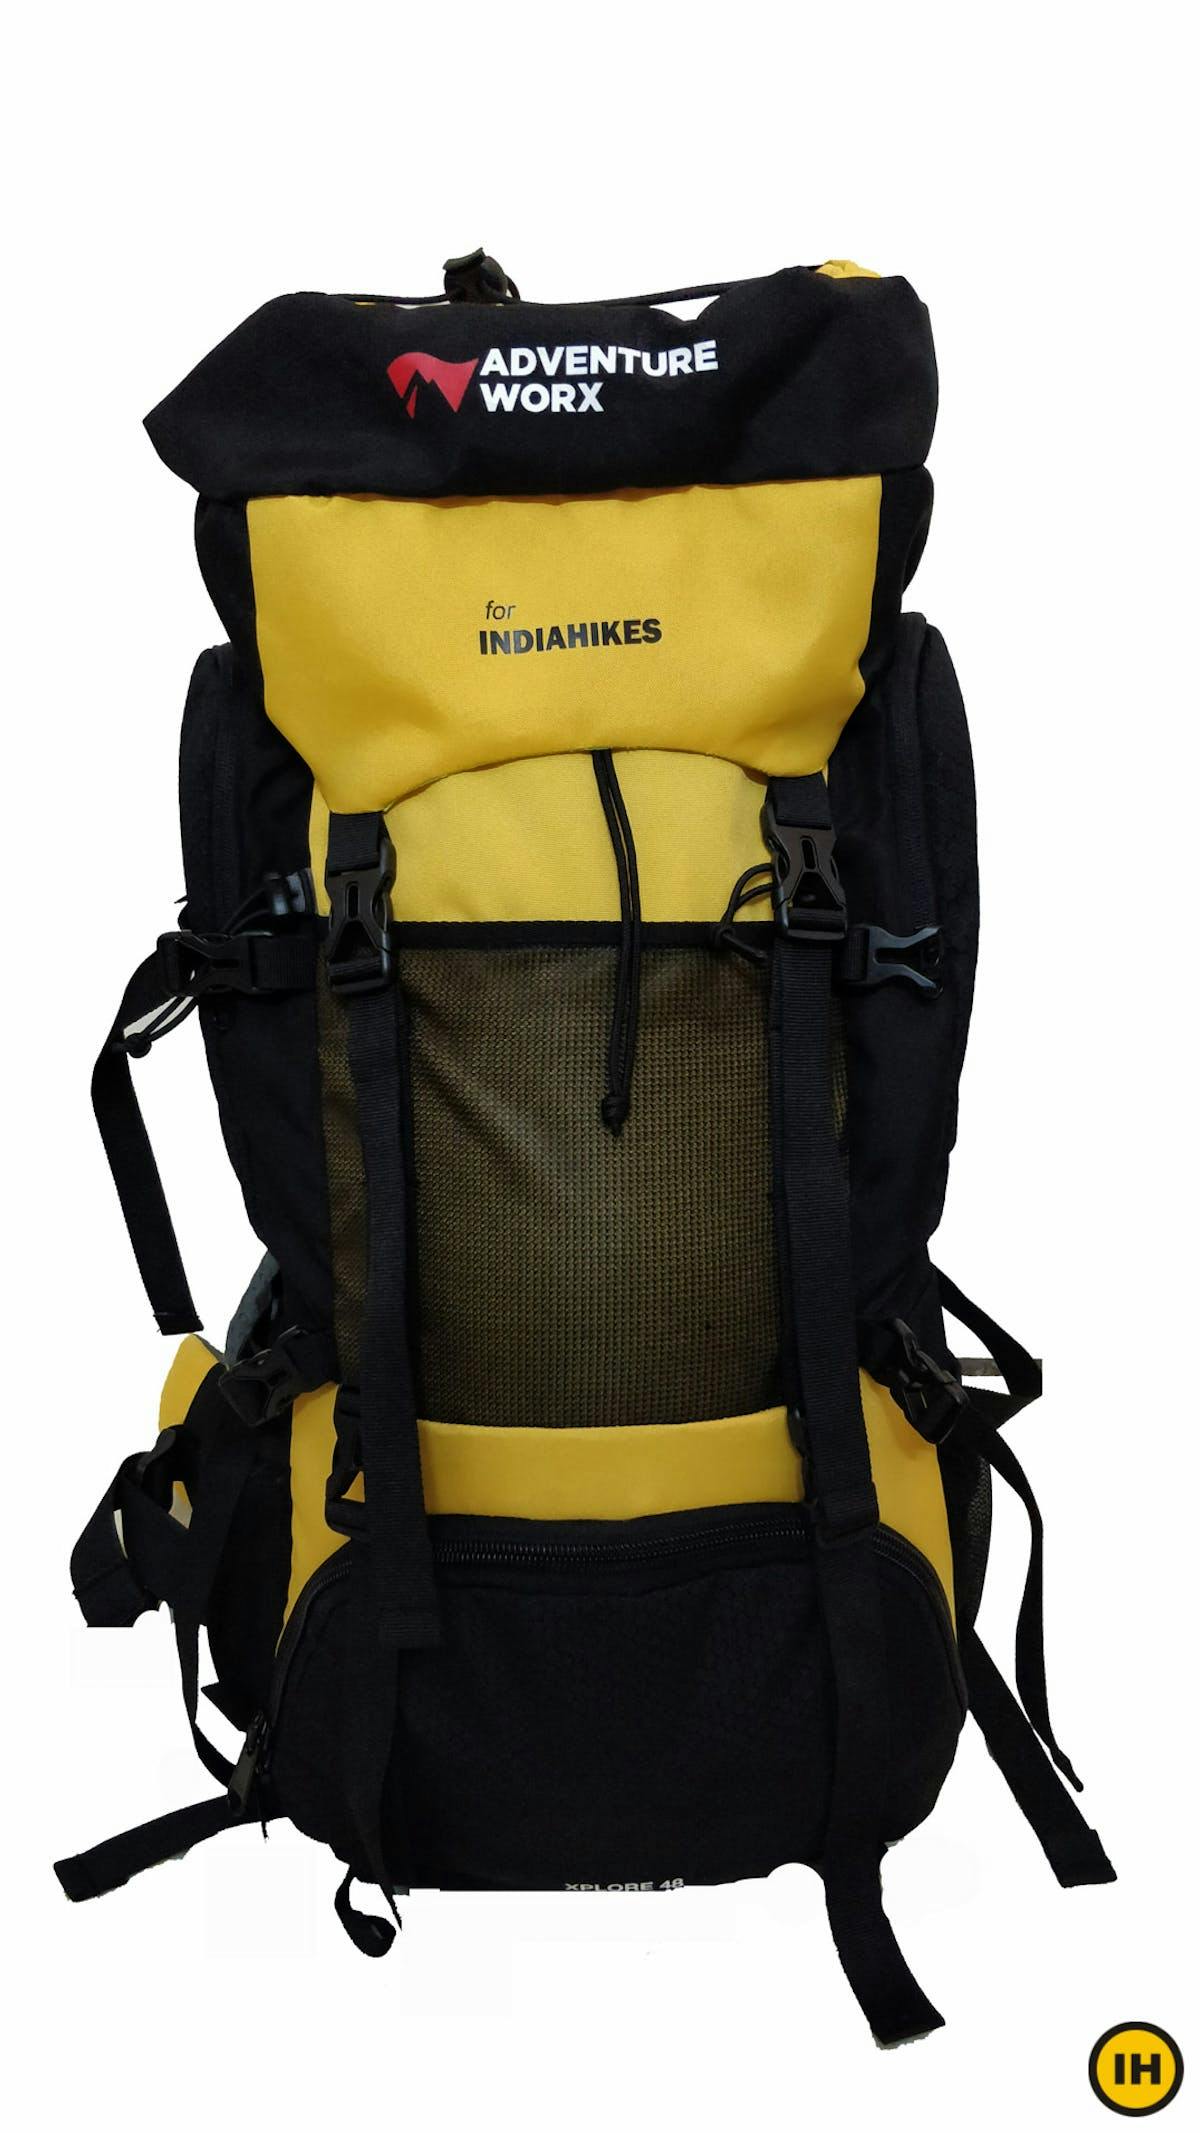 rent gear-trekking backpack-rental backpack-indiahikes-gear related tips-trekking gear